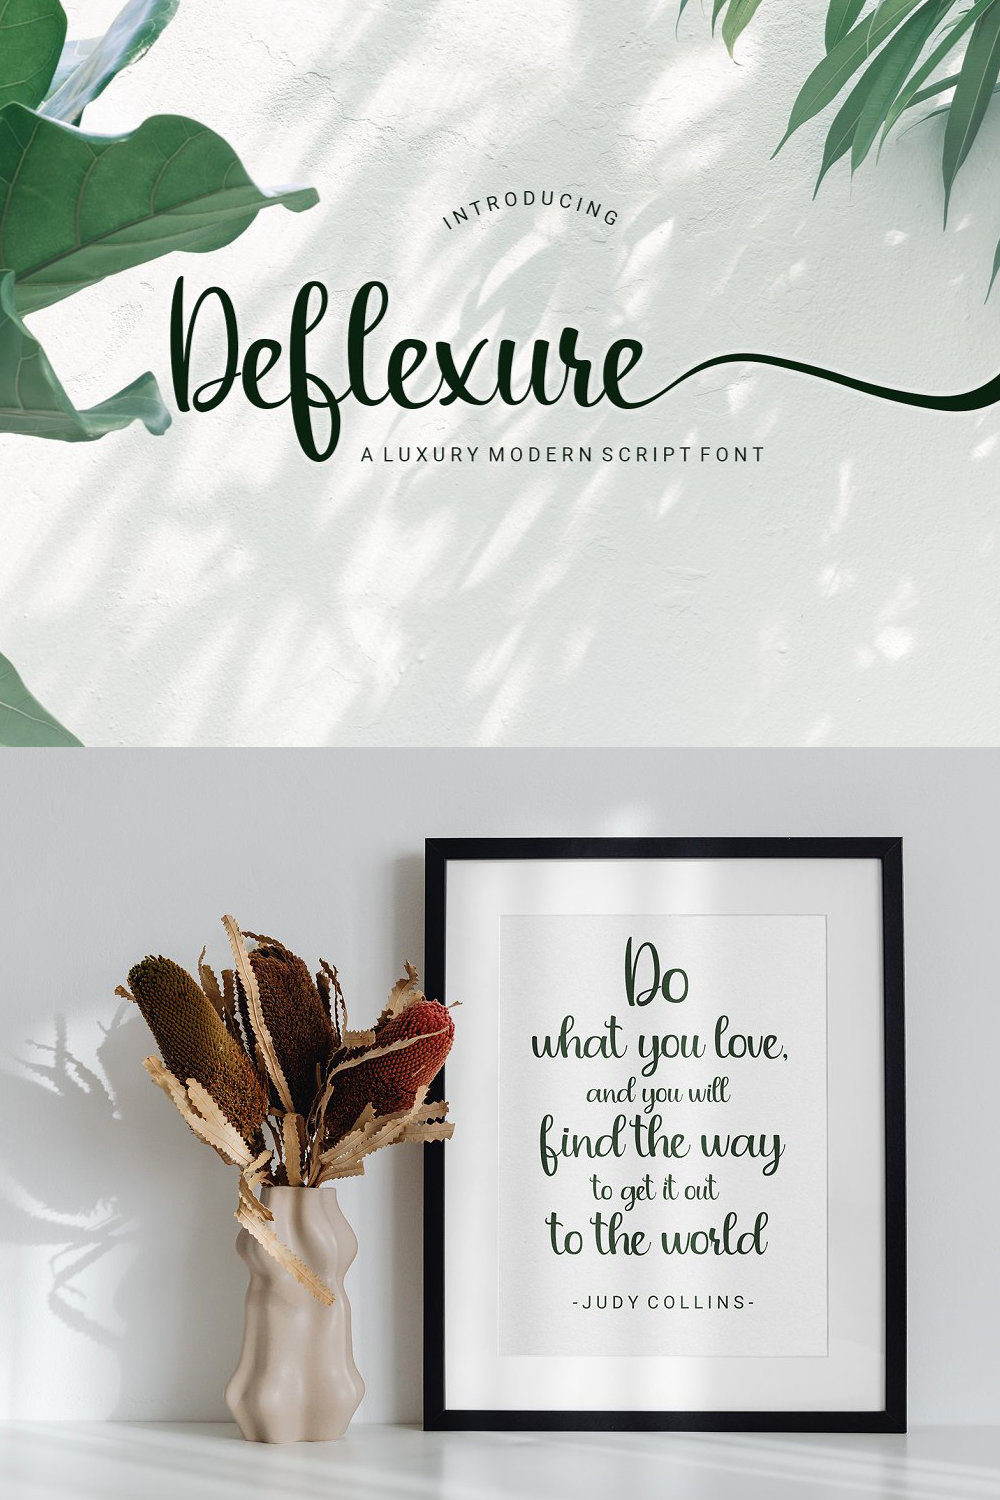 Deflexure - A Luxury Script Font pinterest image.